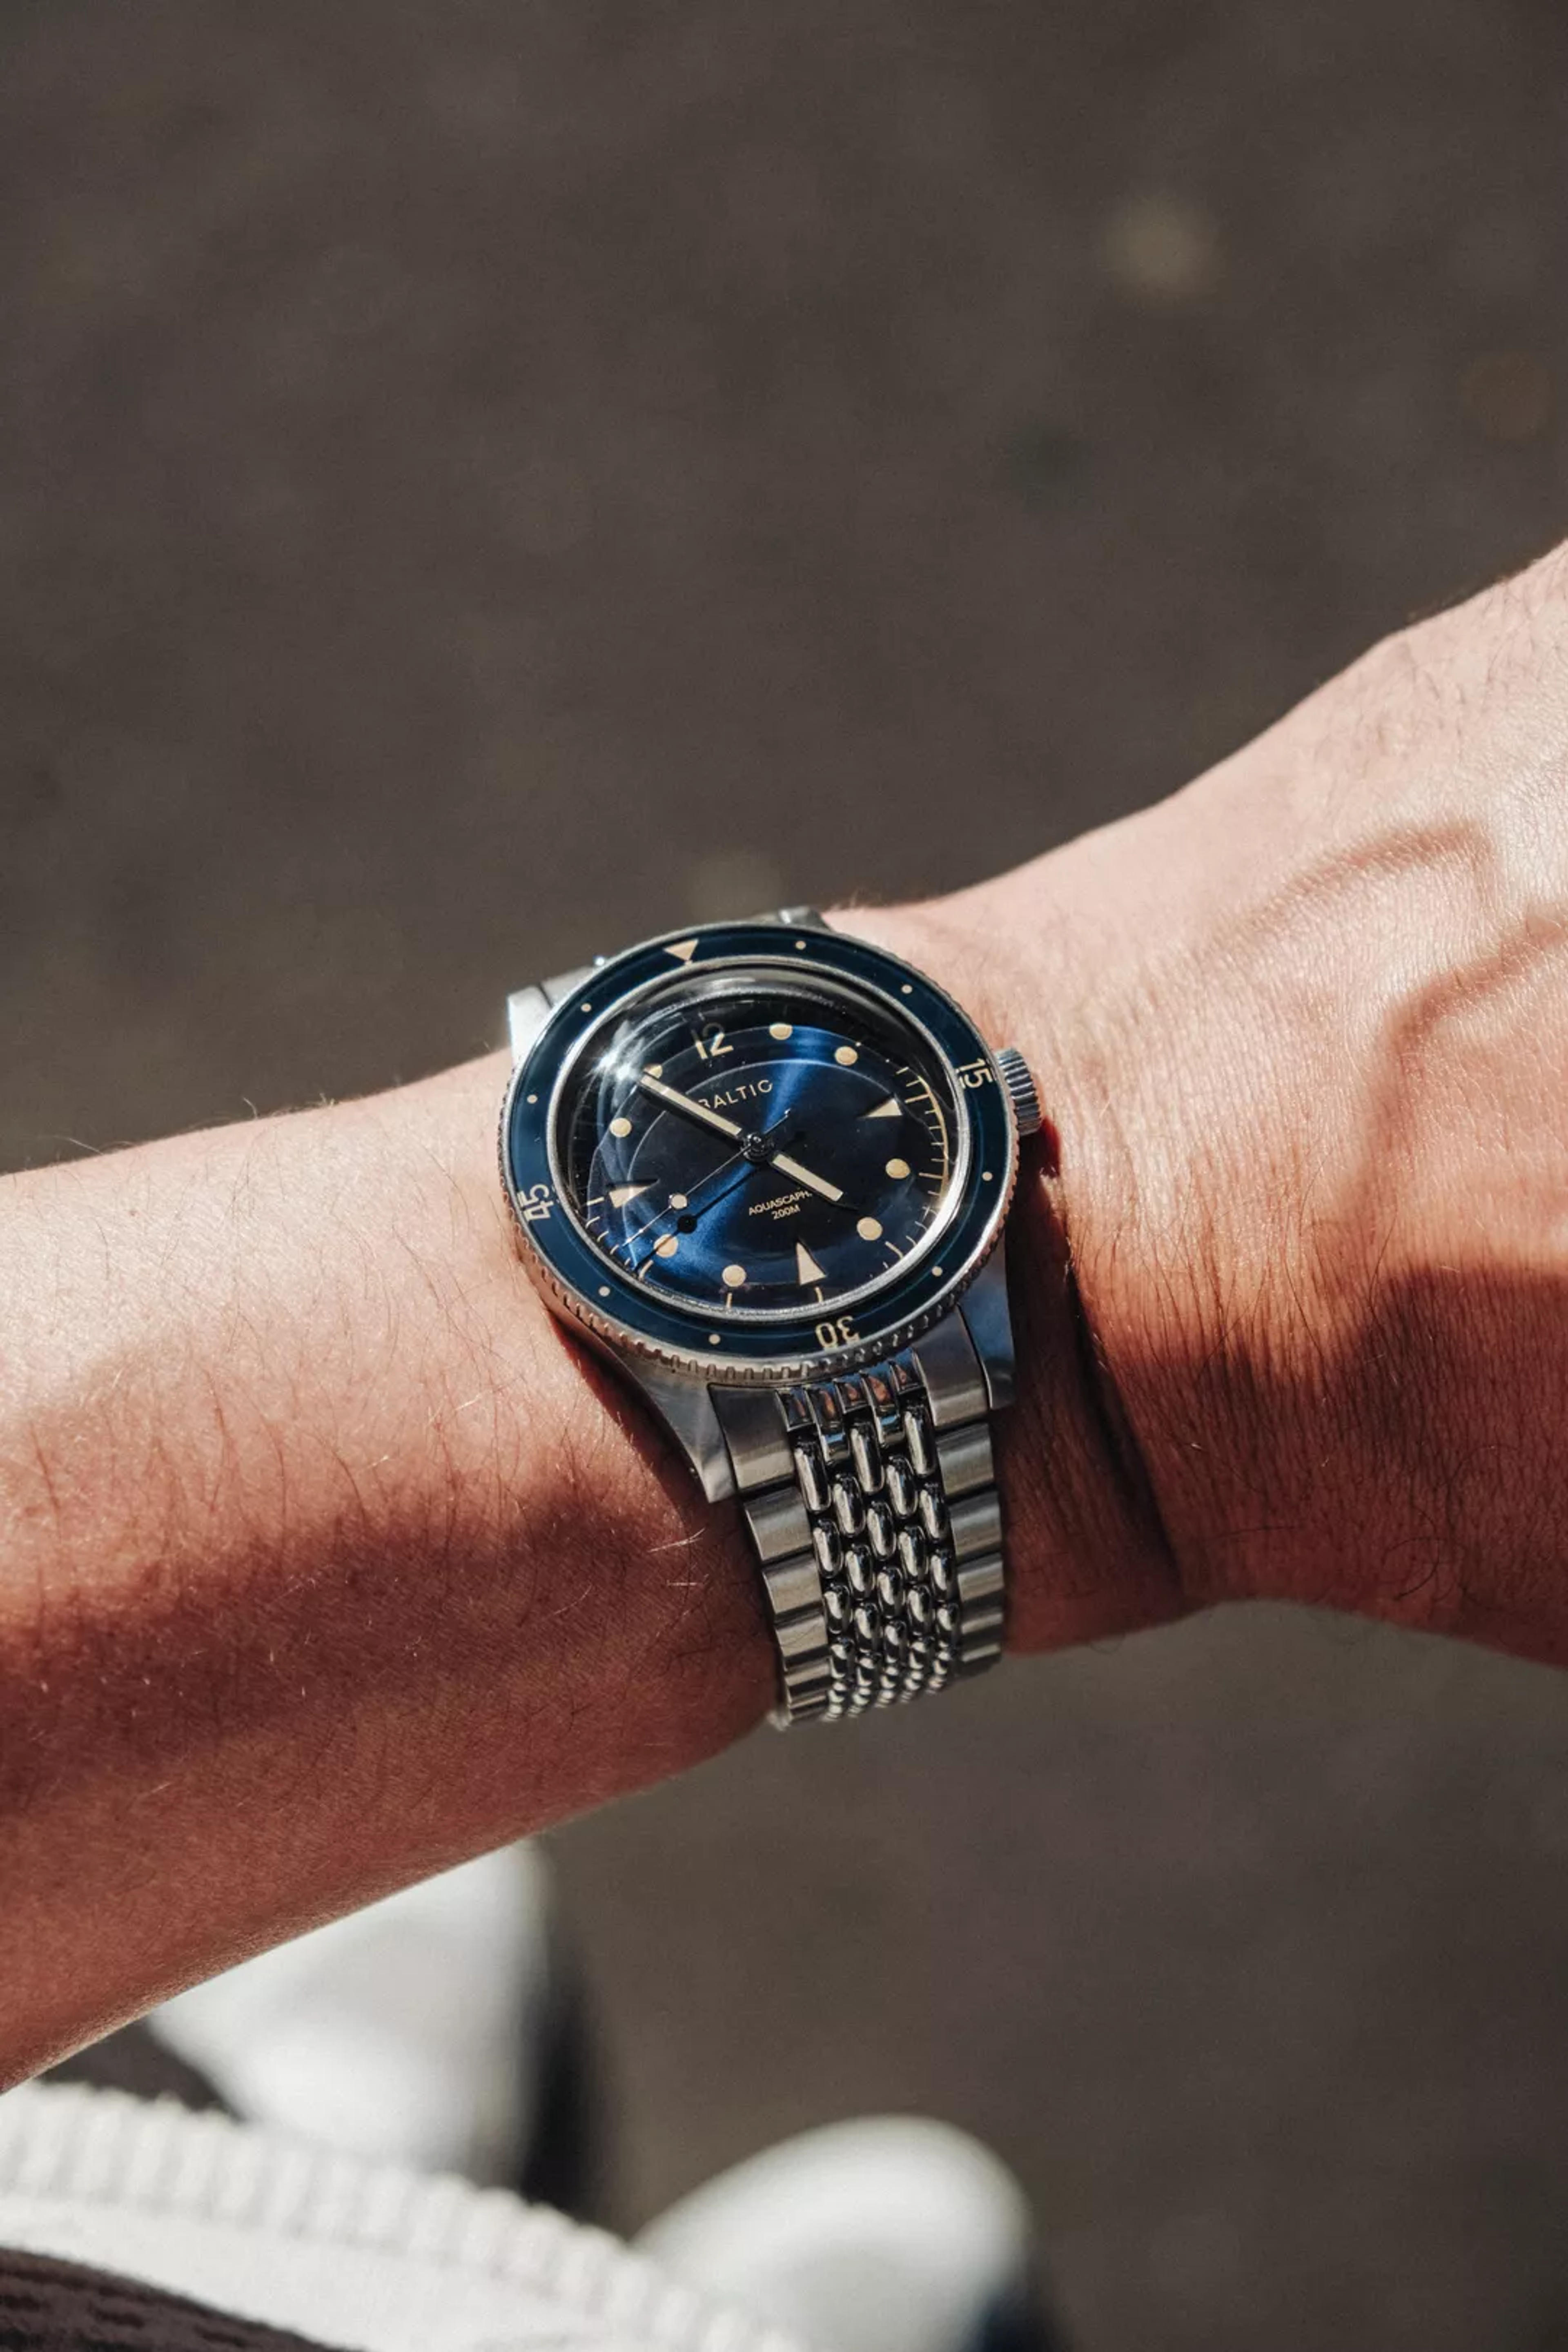 Aquascaphe Classic Blue Gilt - Baltic Watches